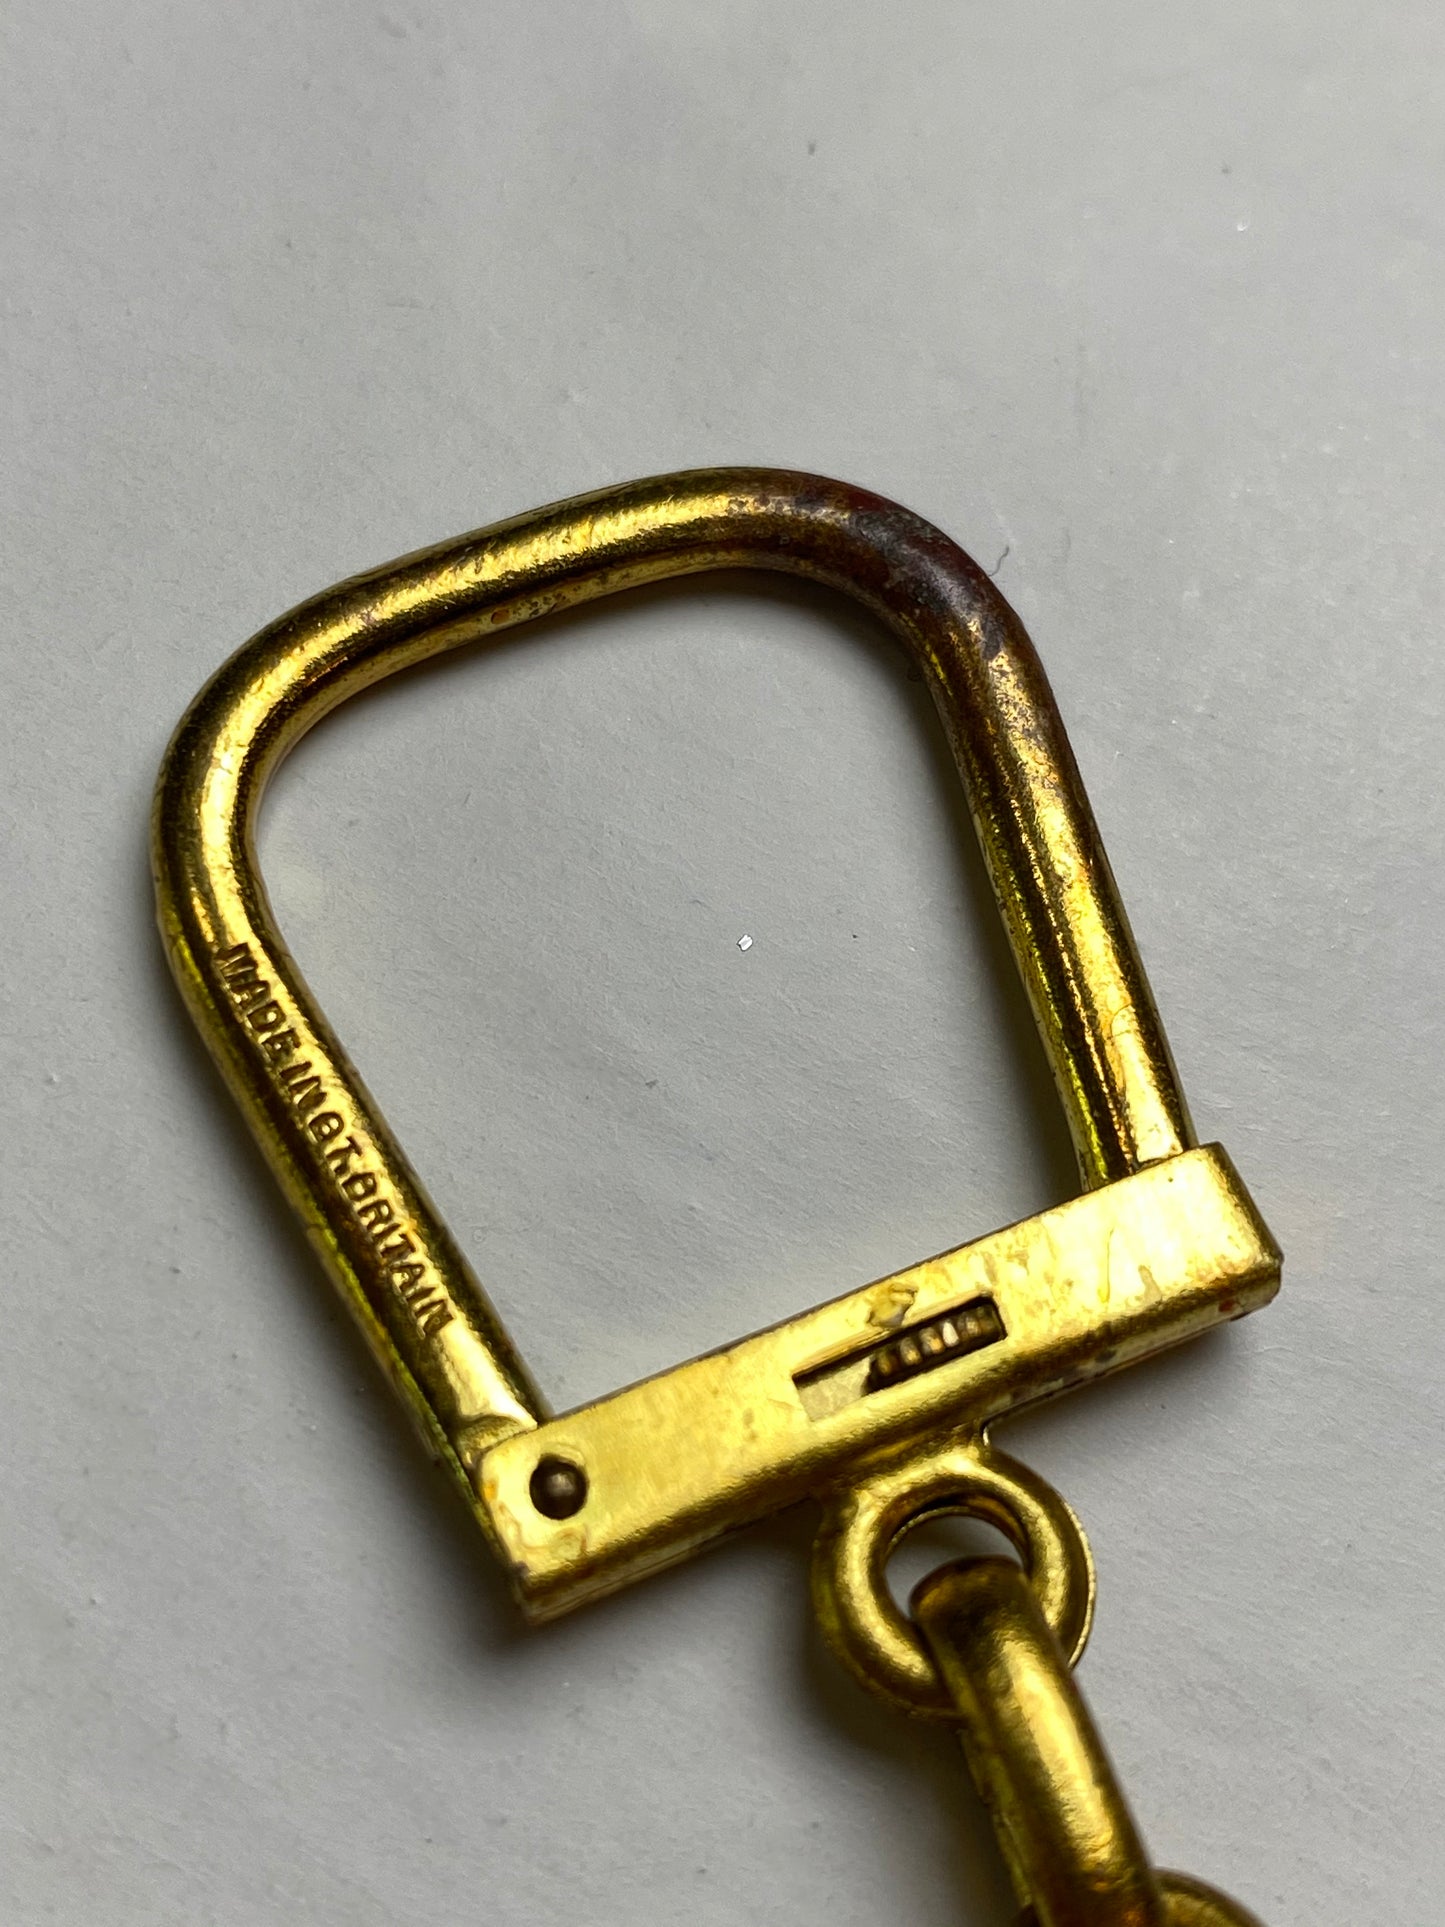 Grant's Scotch Vintage Keychain